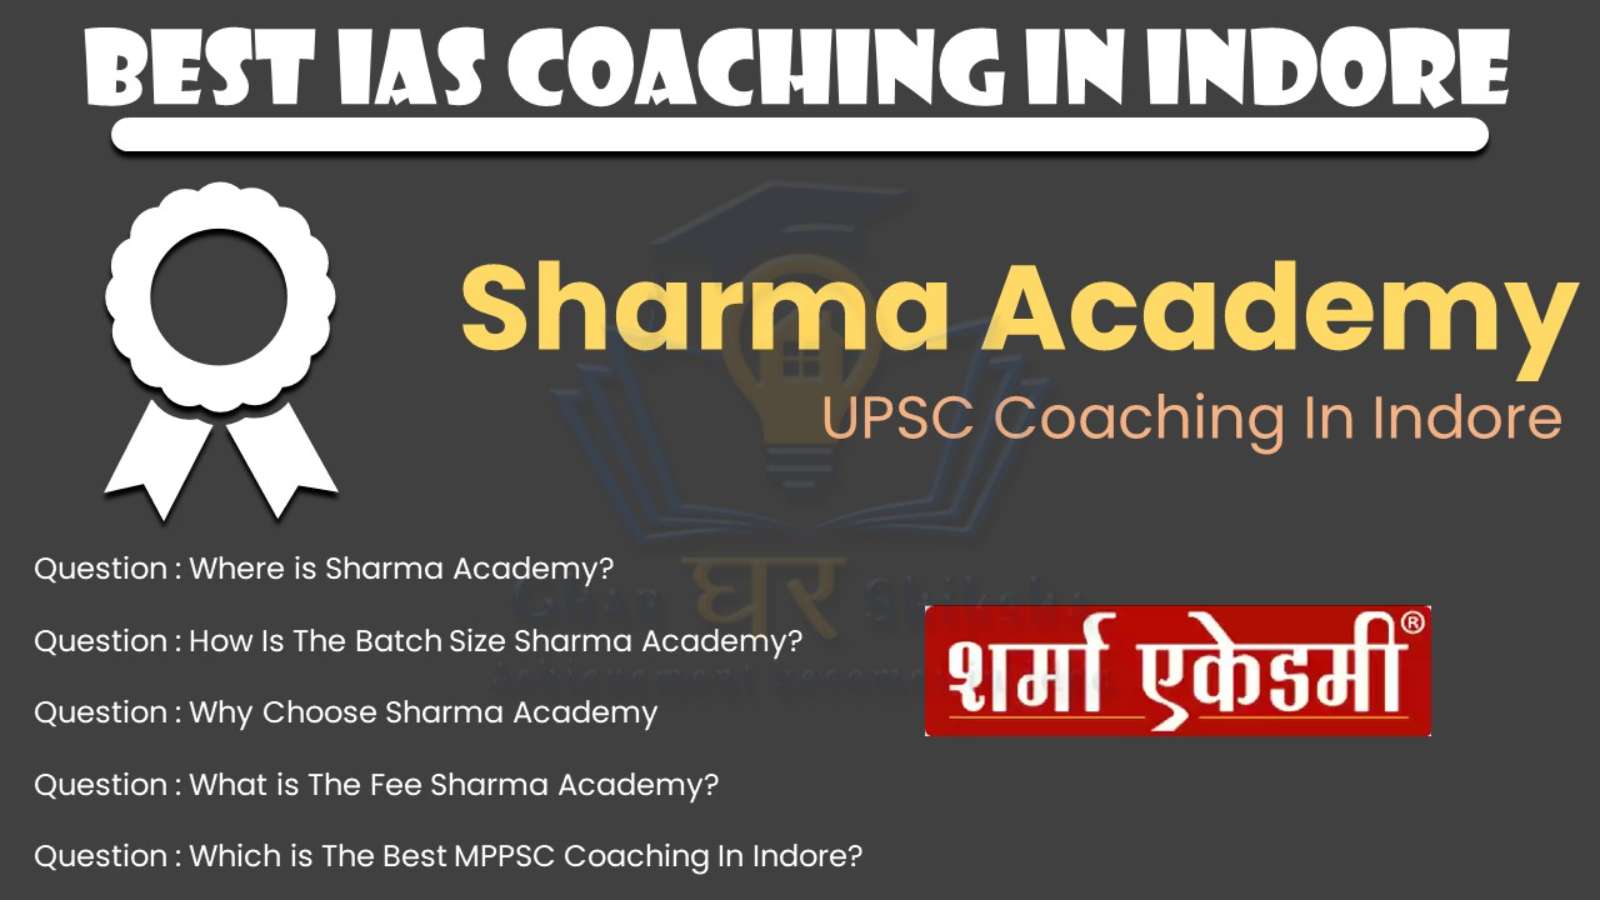 Top IAS Coaching In indore